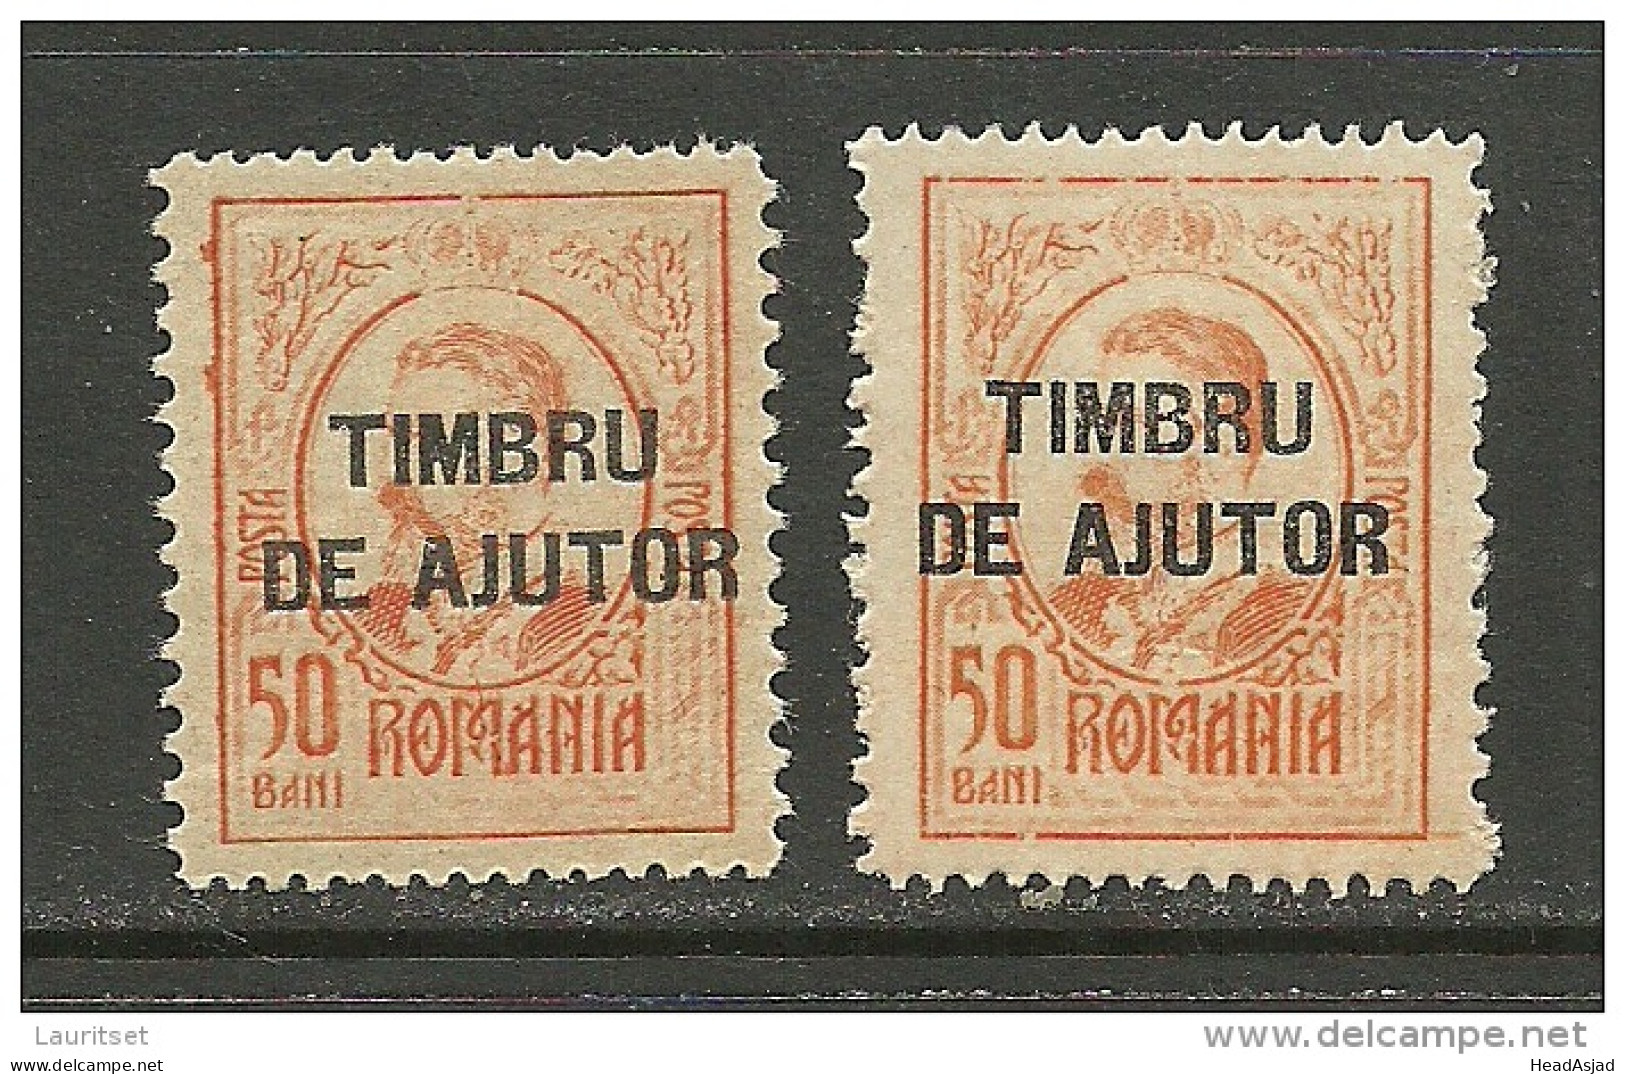 ROMANIA Rumänien 1915 Revenue Stamps Steuermarken 50 Bani, 2 Exemplares * - Steuermarken